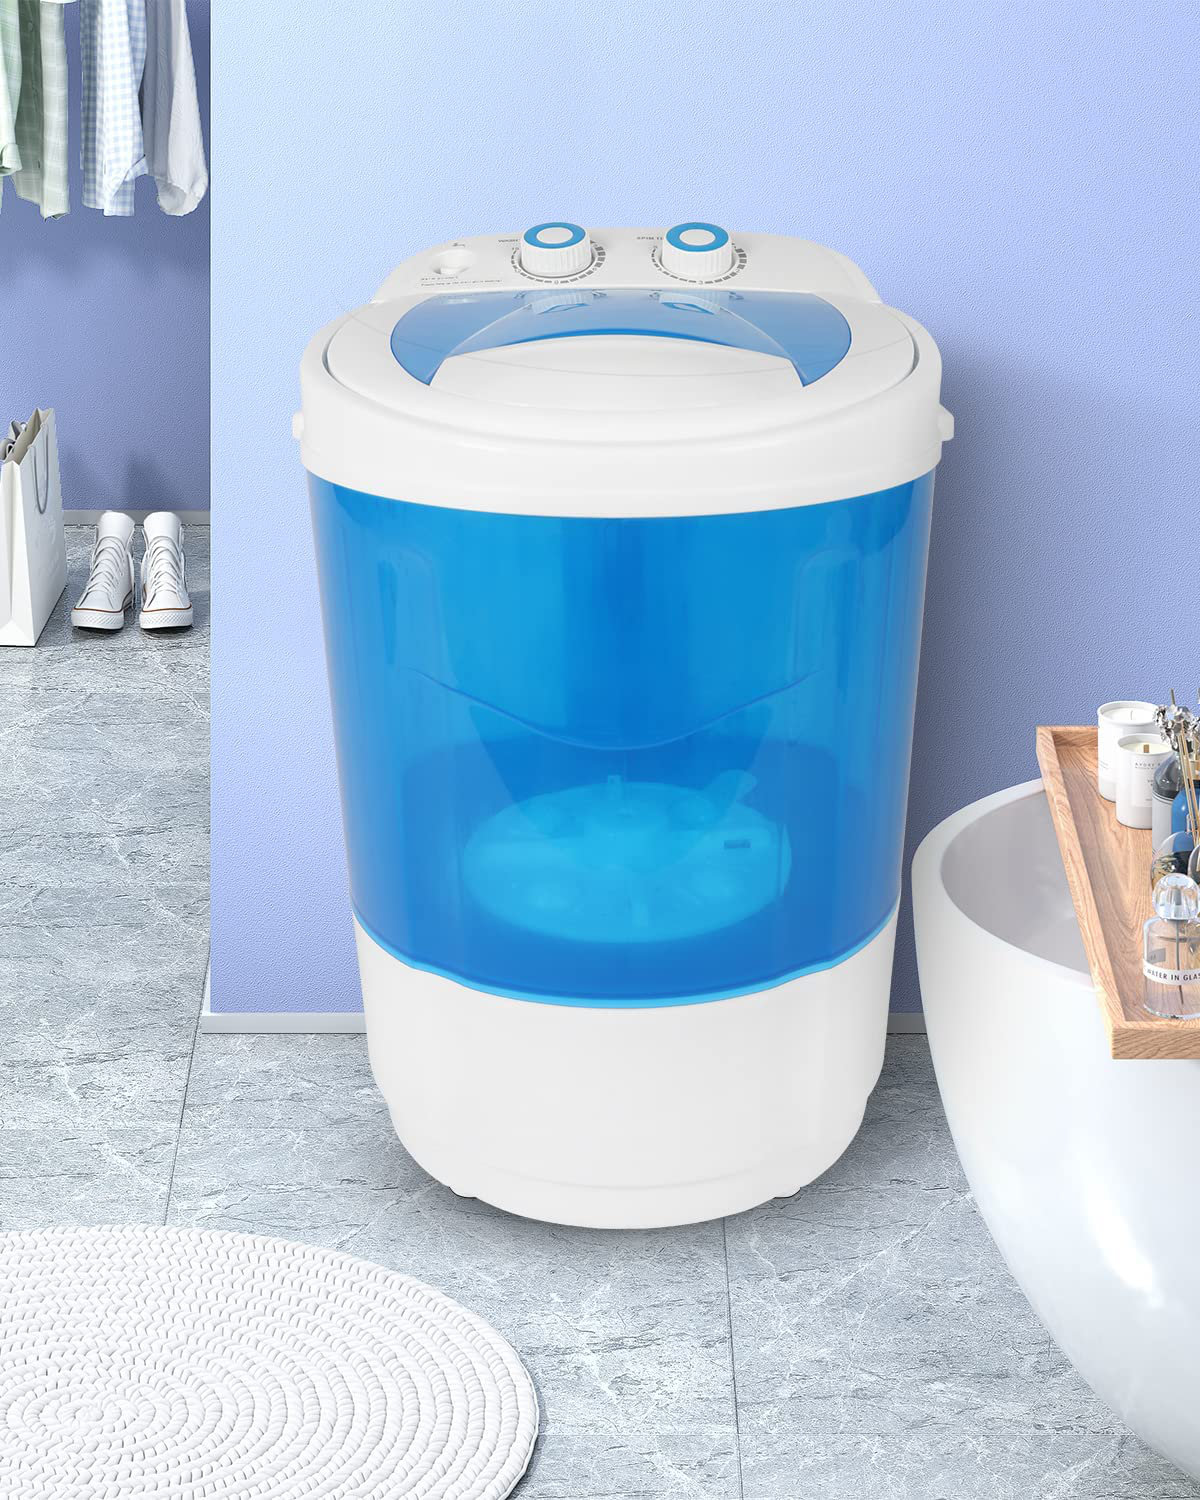 TABU 7.7lbs Mini Portable Washing Machine, Compact Washer with